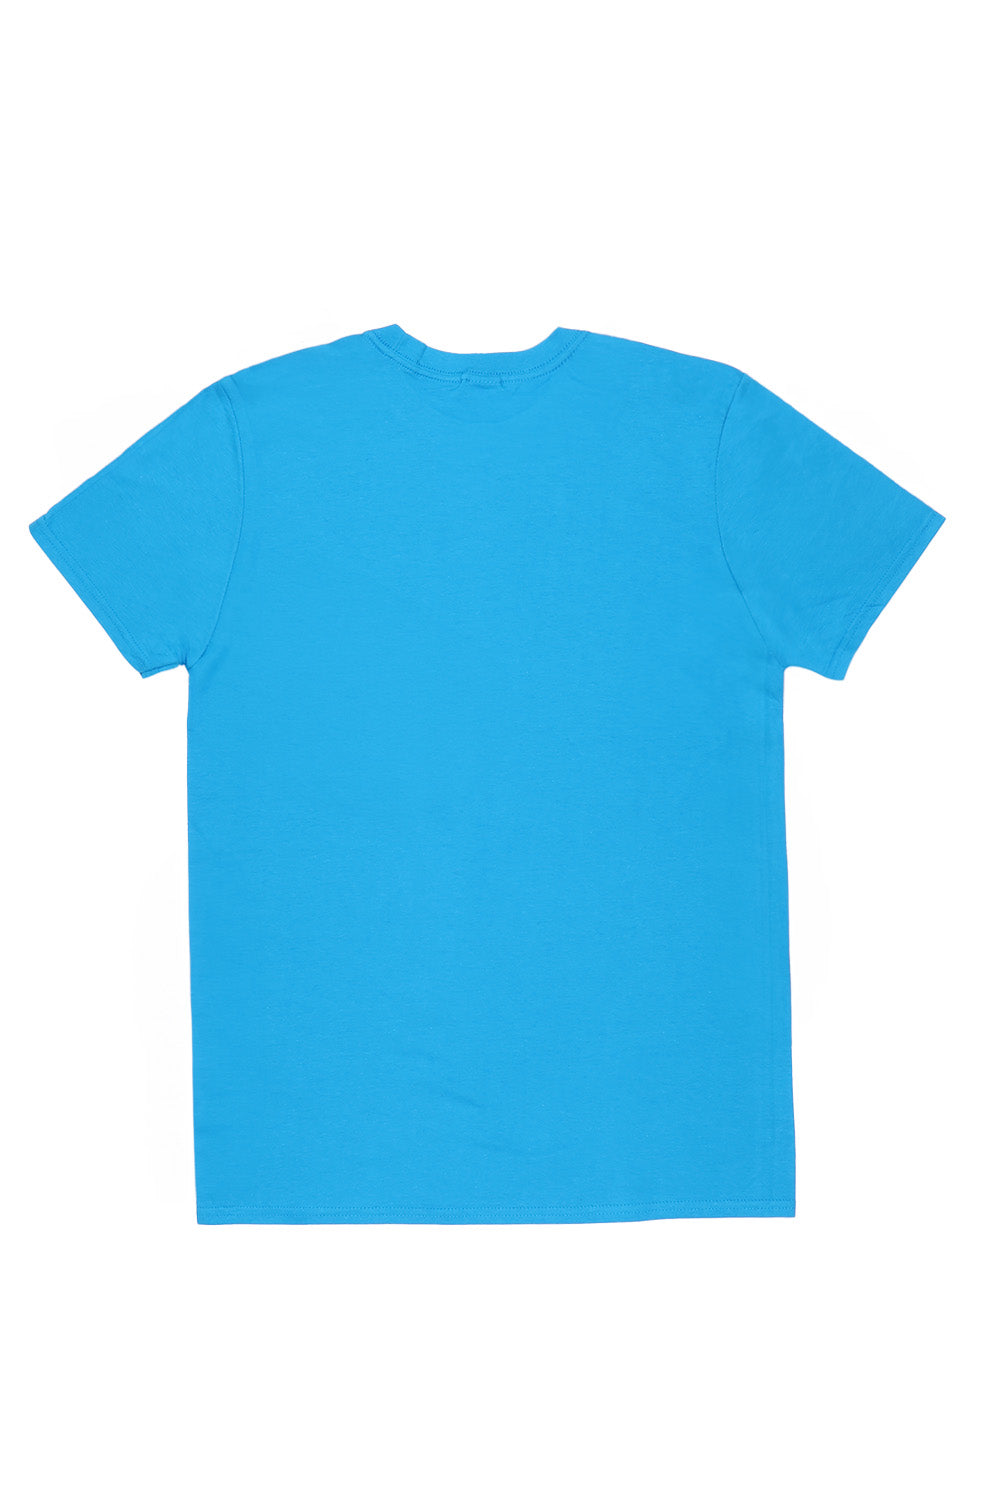 Los Angeles T-Shirt in Sapphire Blue (Custom Packs)